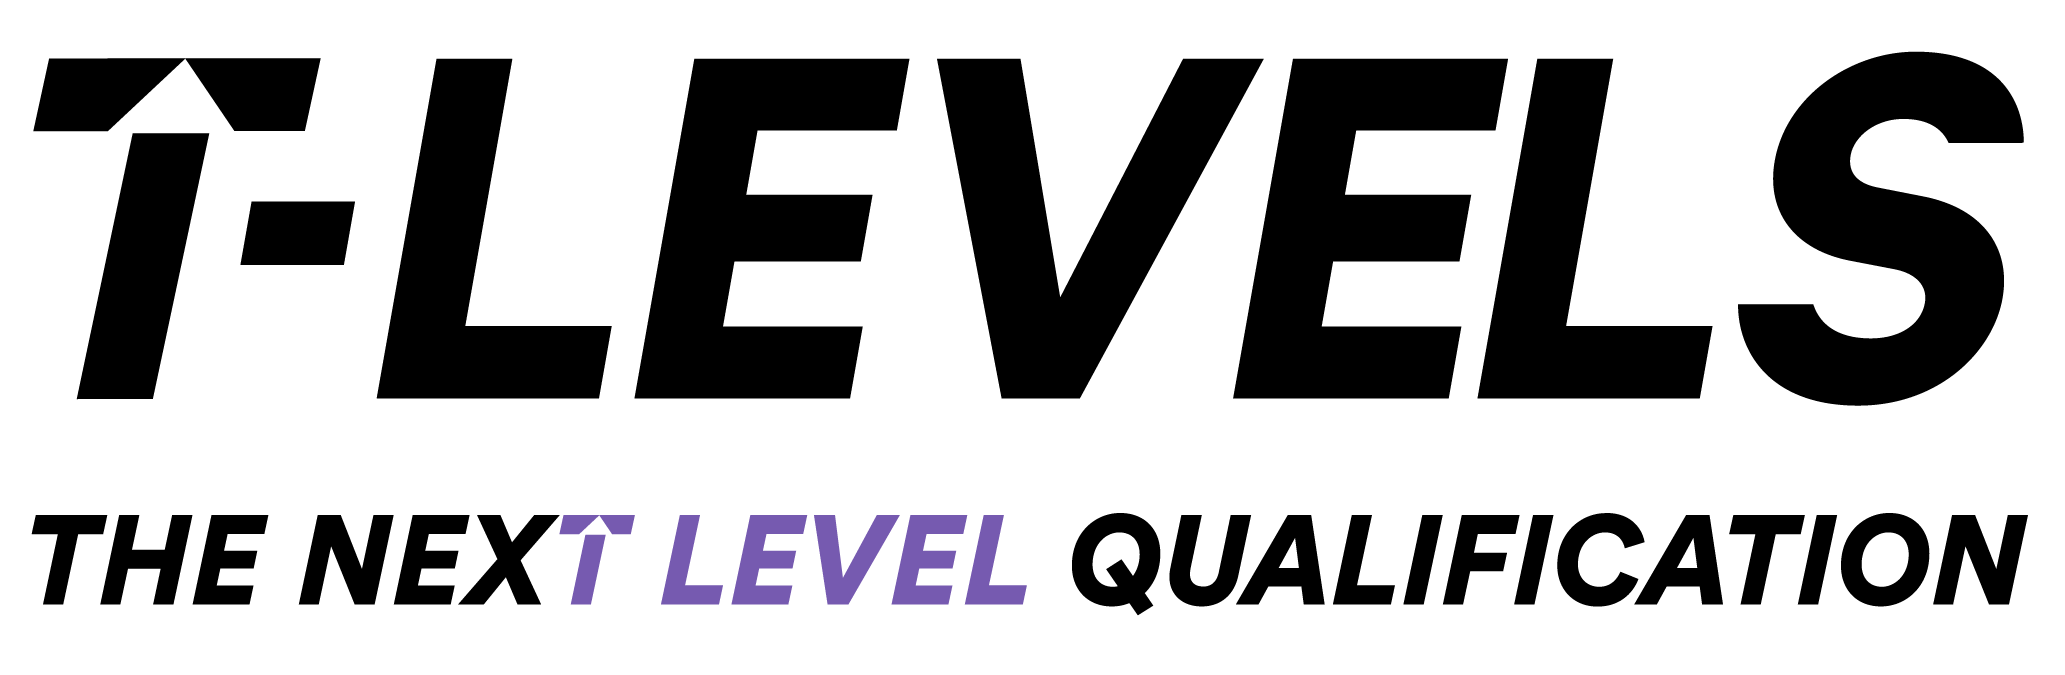 T Levels - The Next Level Qualification logo